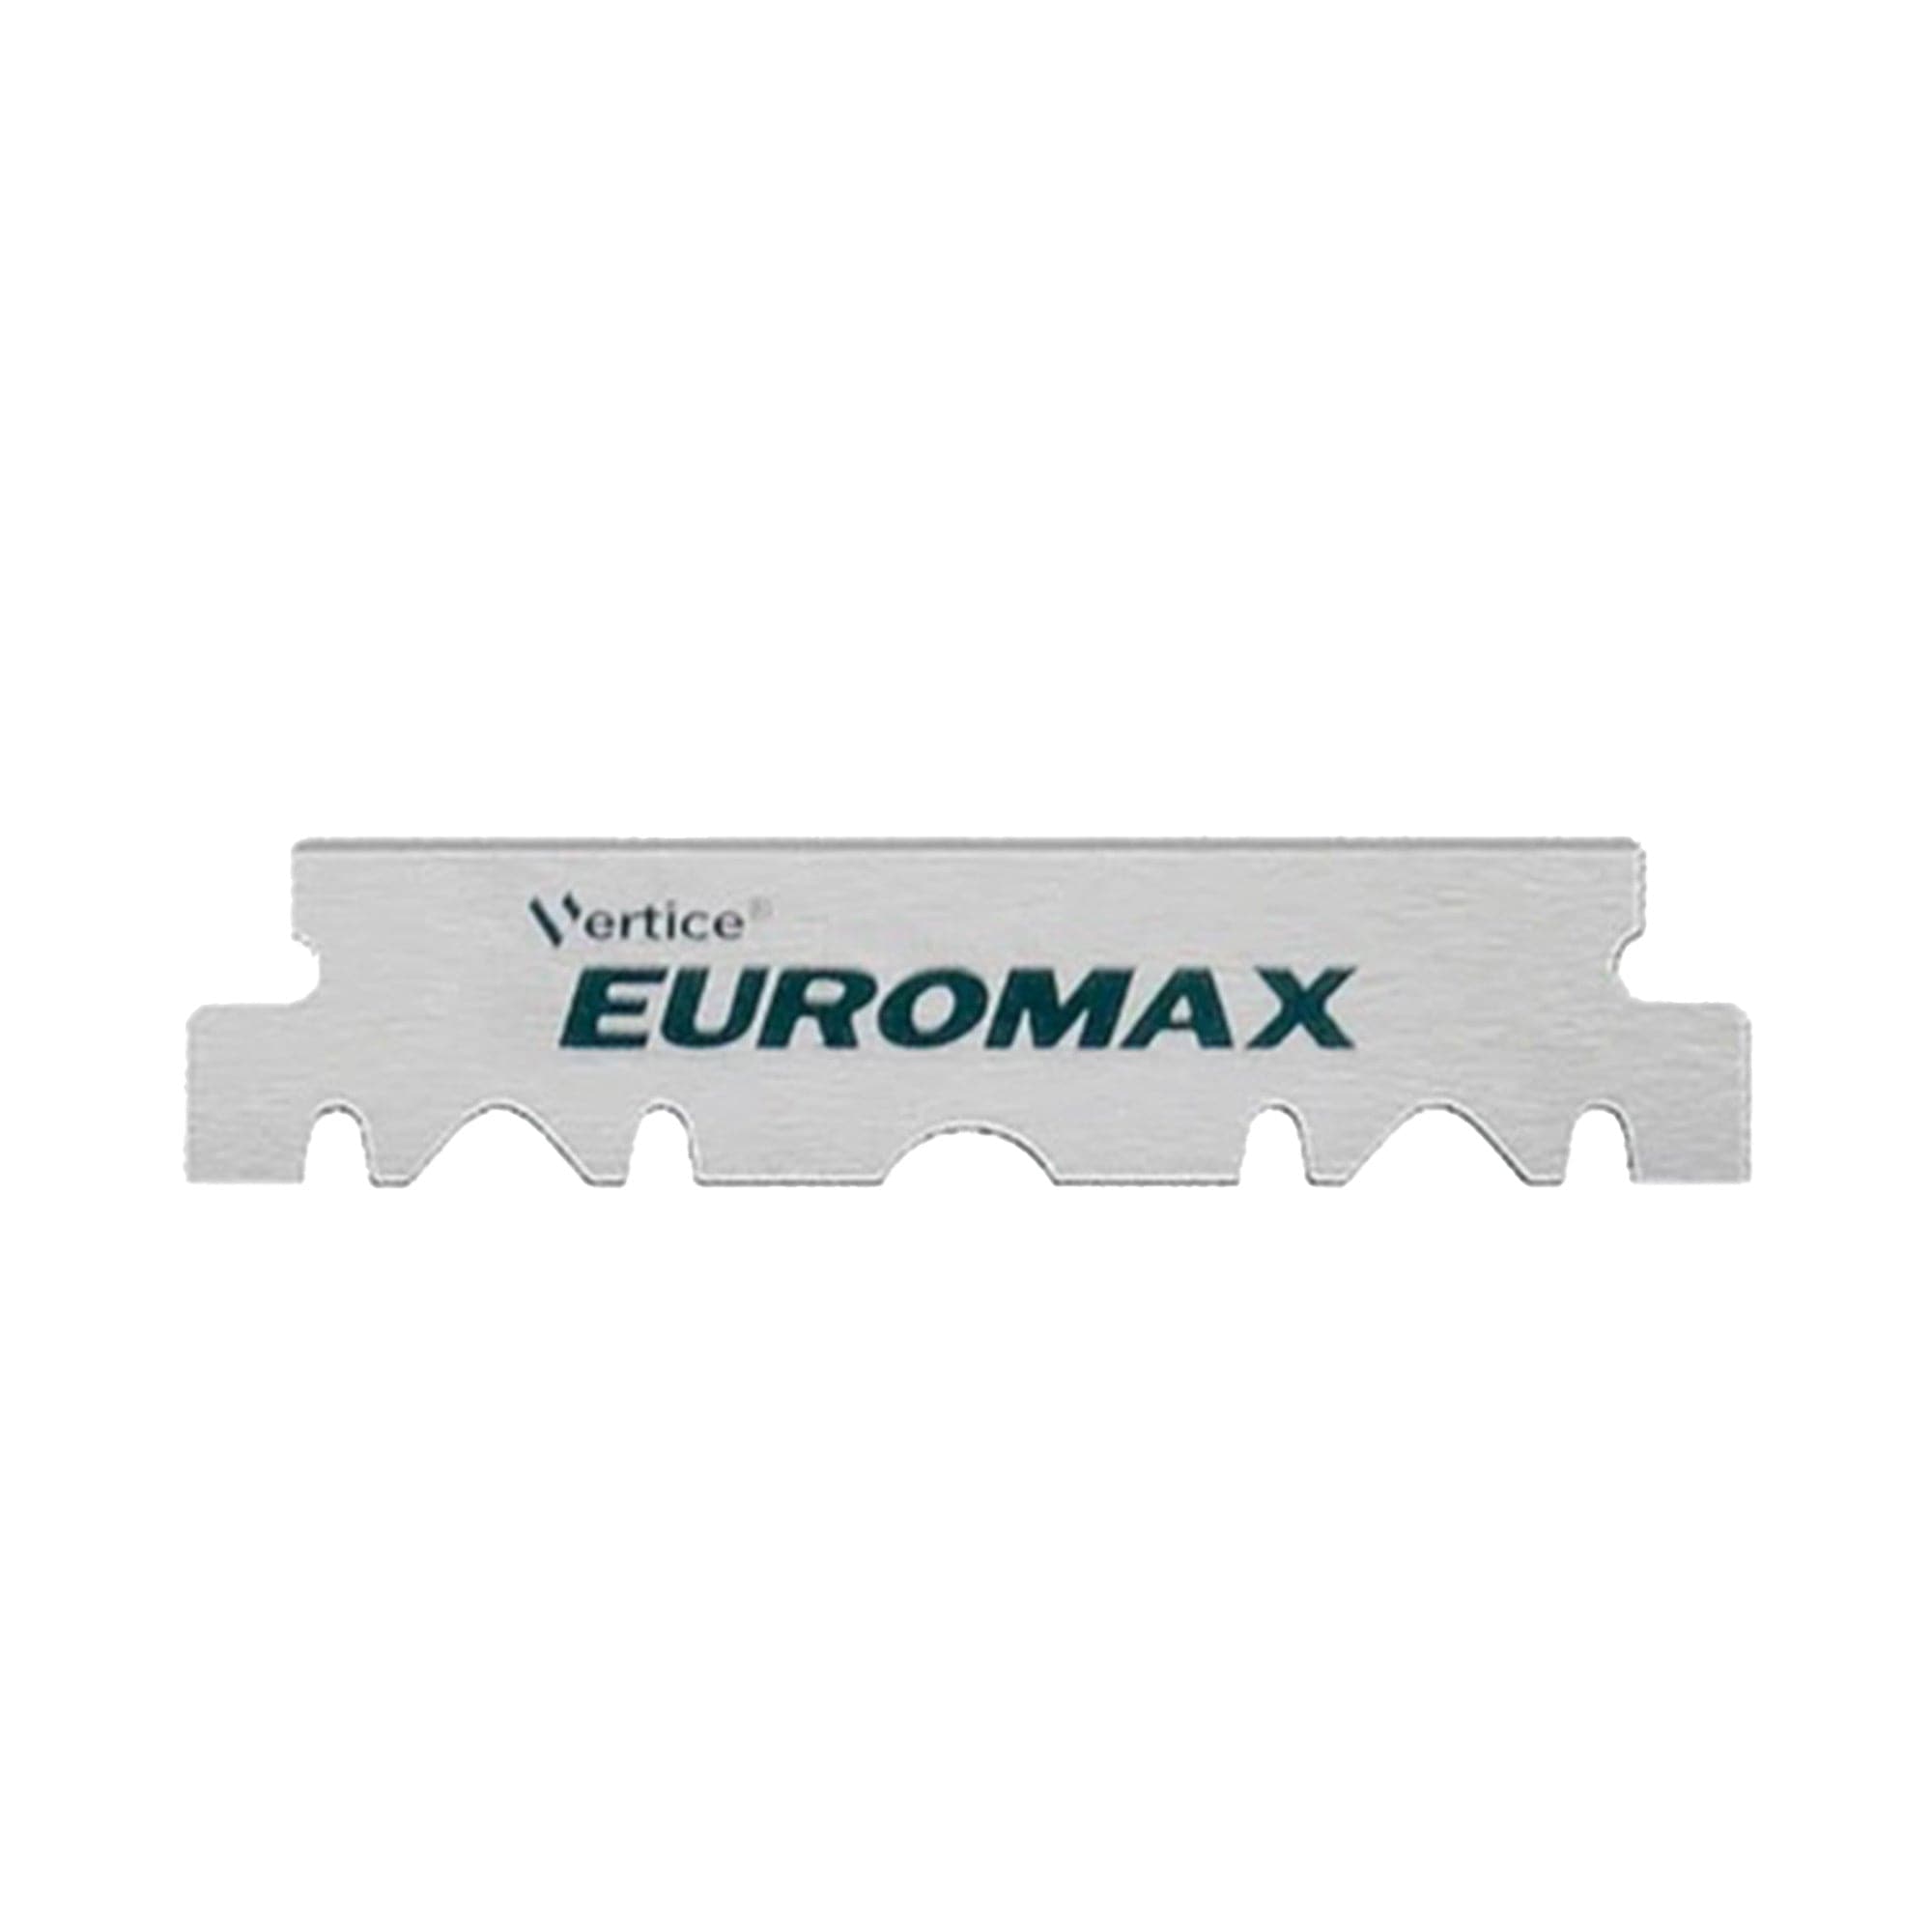 Euromax - Cyro Sputtered Platinum Blade Single Edge Blades (100pcs)